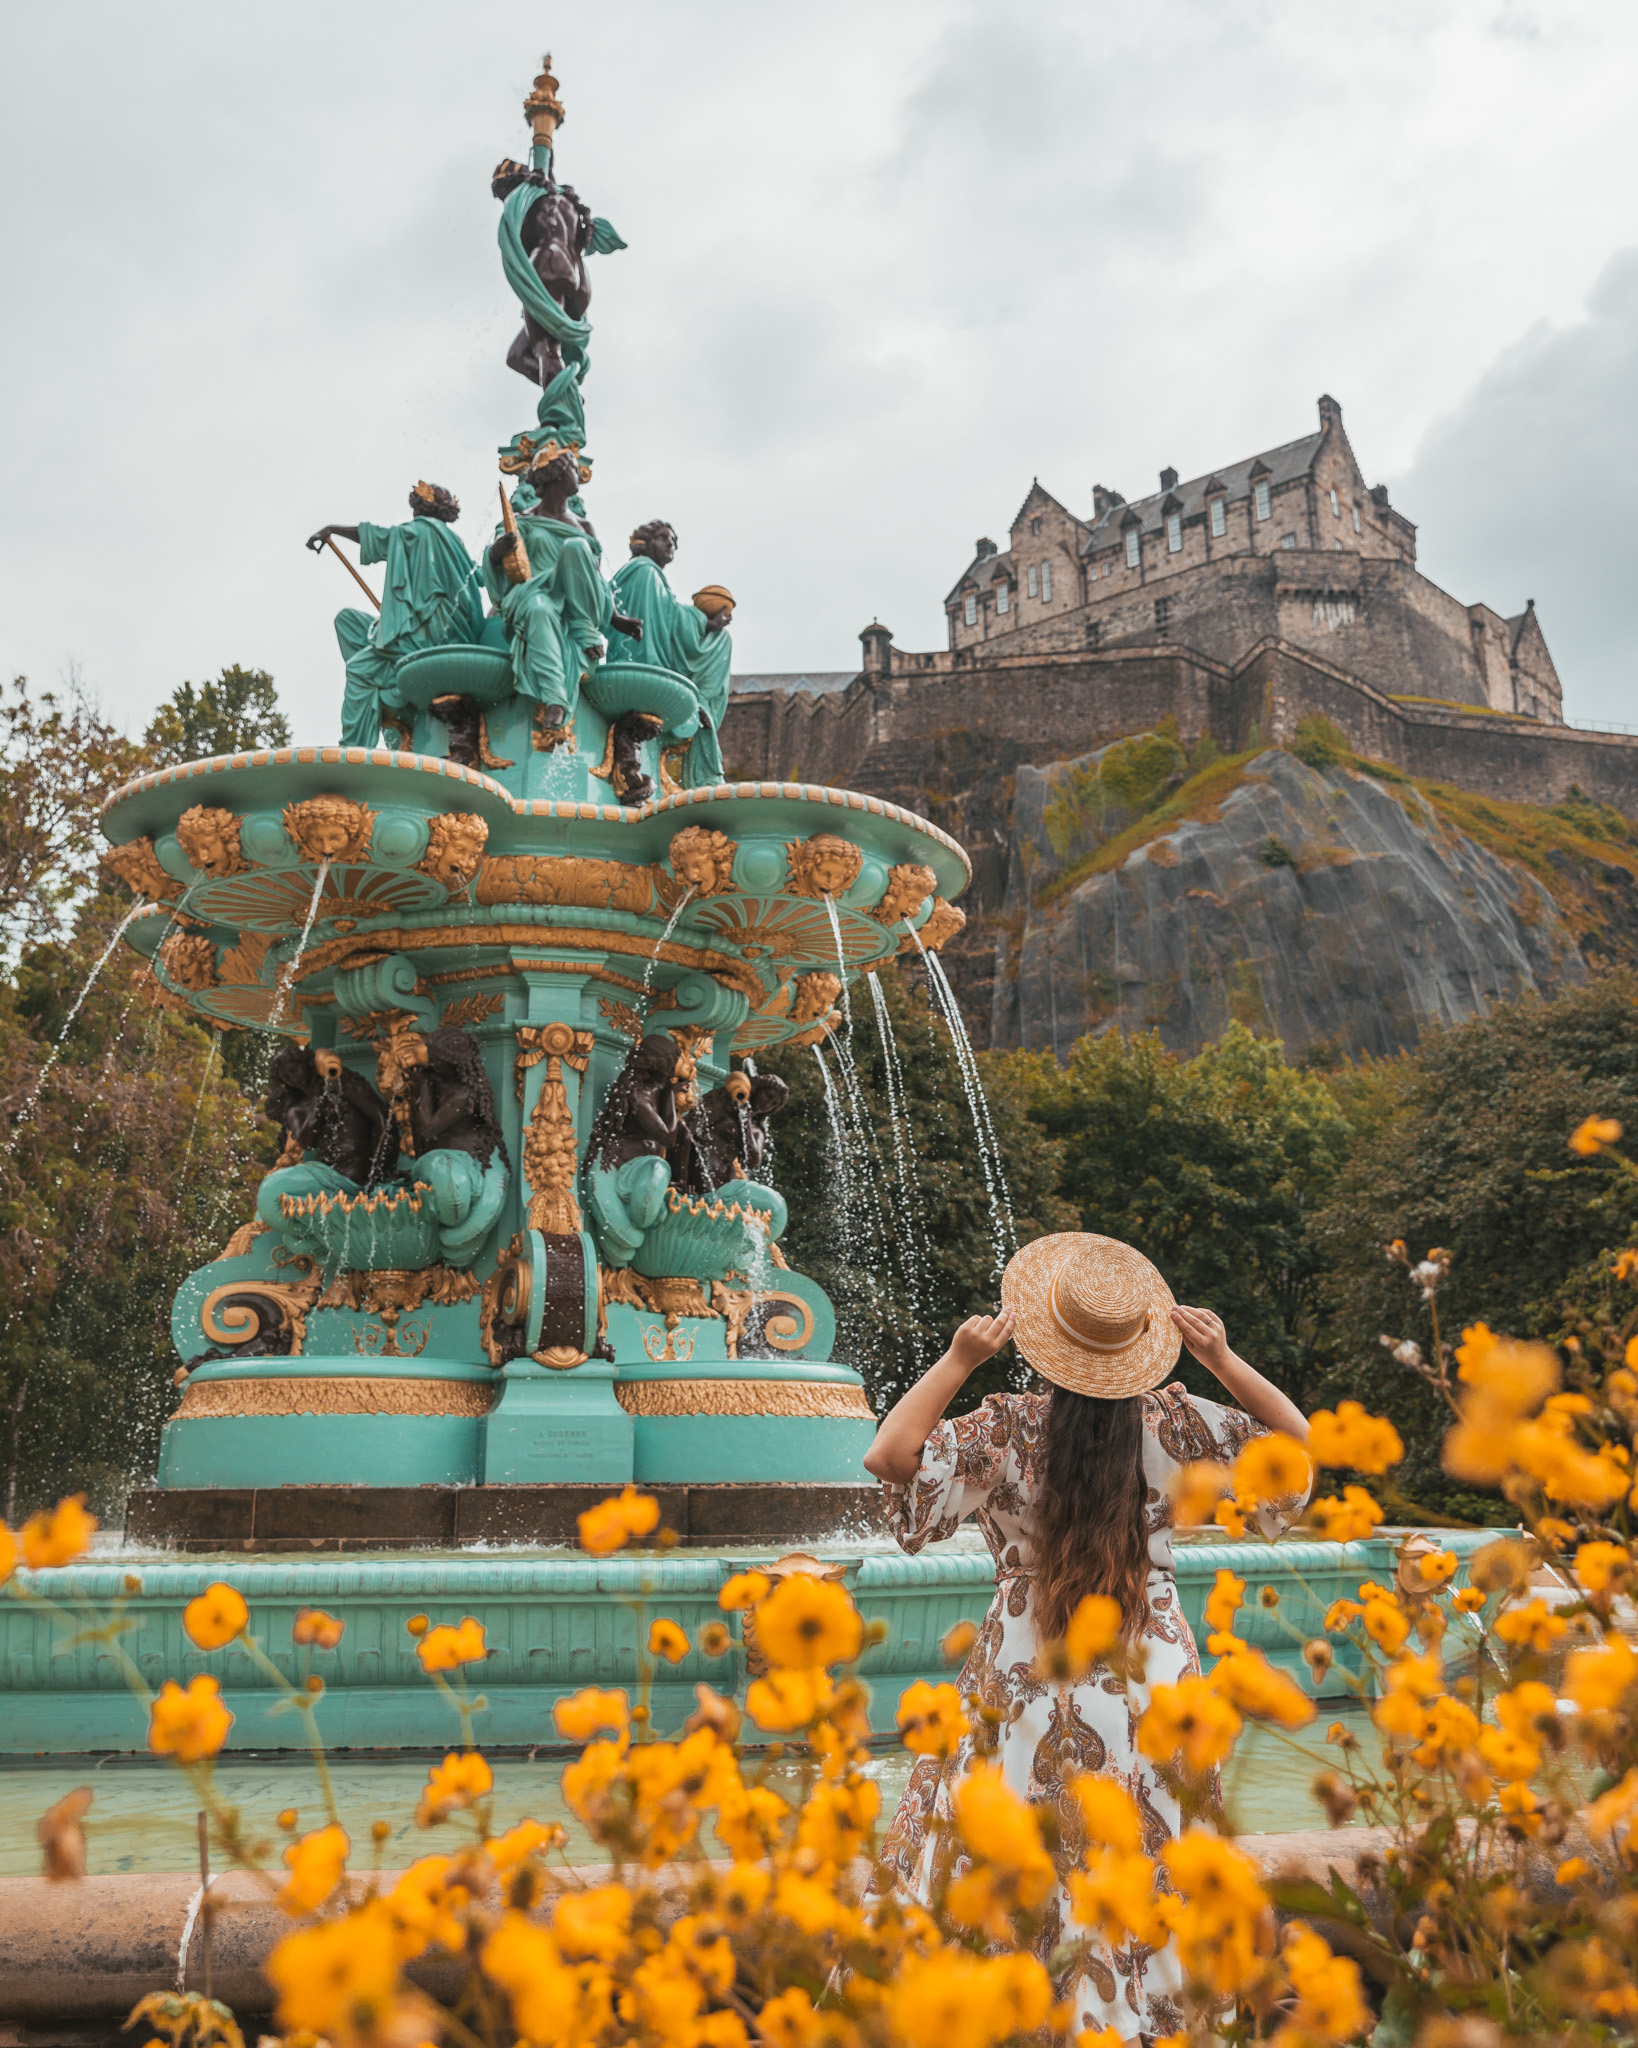 Ross Fountain in Princes Street Gardens // The Most Instagrammable Spots in Edinburgh, Scotland #edinburgh #scotland #readysetjetset #blogpost #travel #UK #Europe